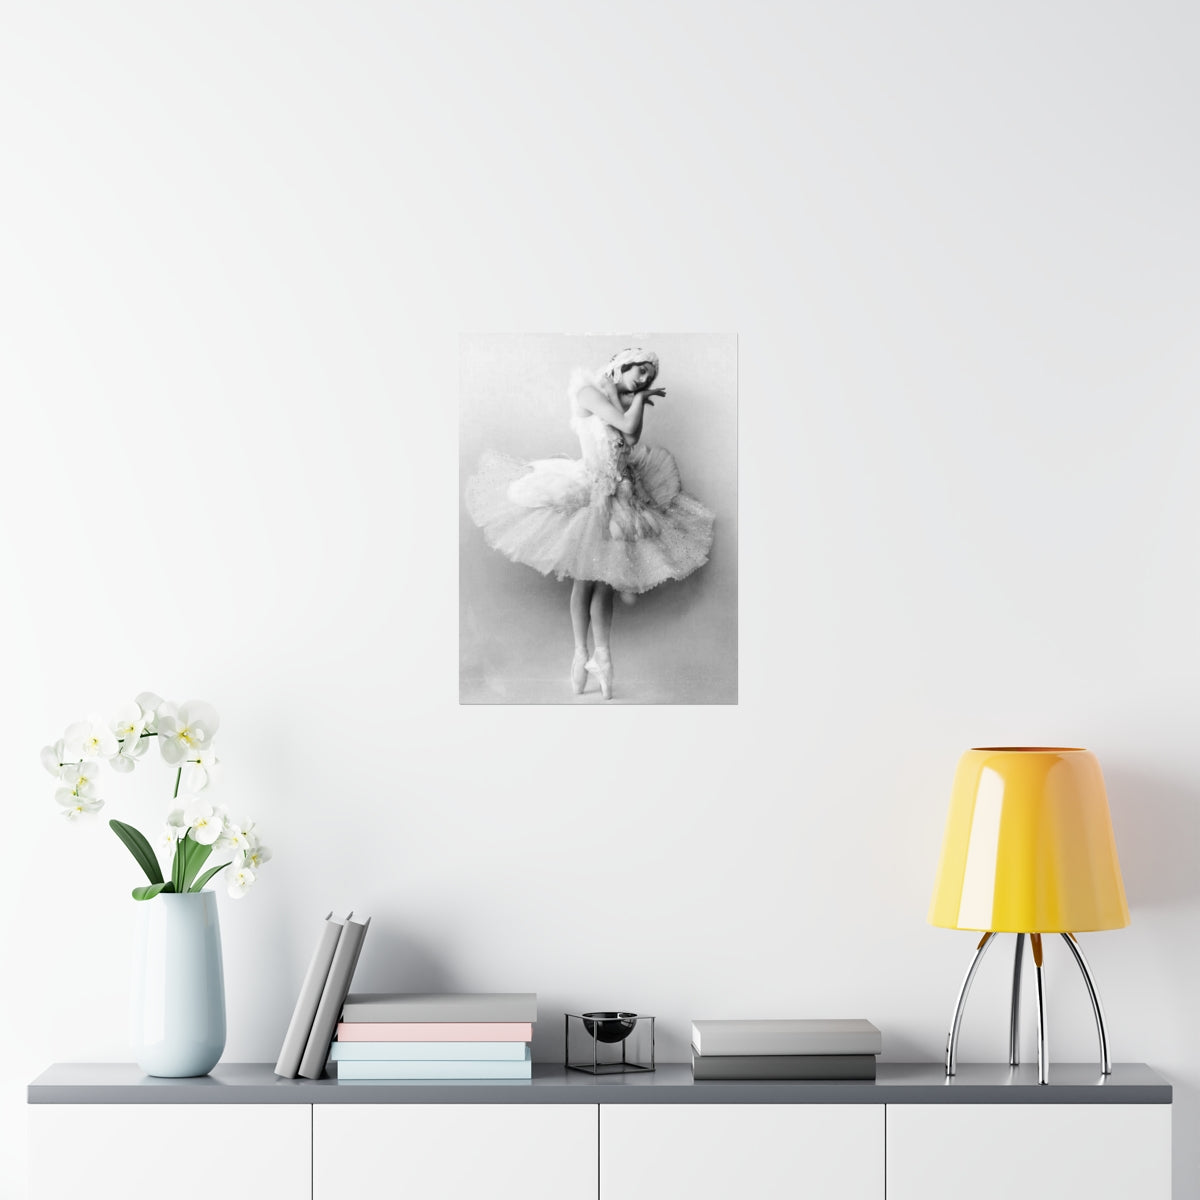 Anna Pavlova Ballet Dancer Black And White Ballerina Photograph Print Poster